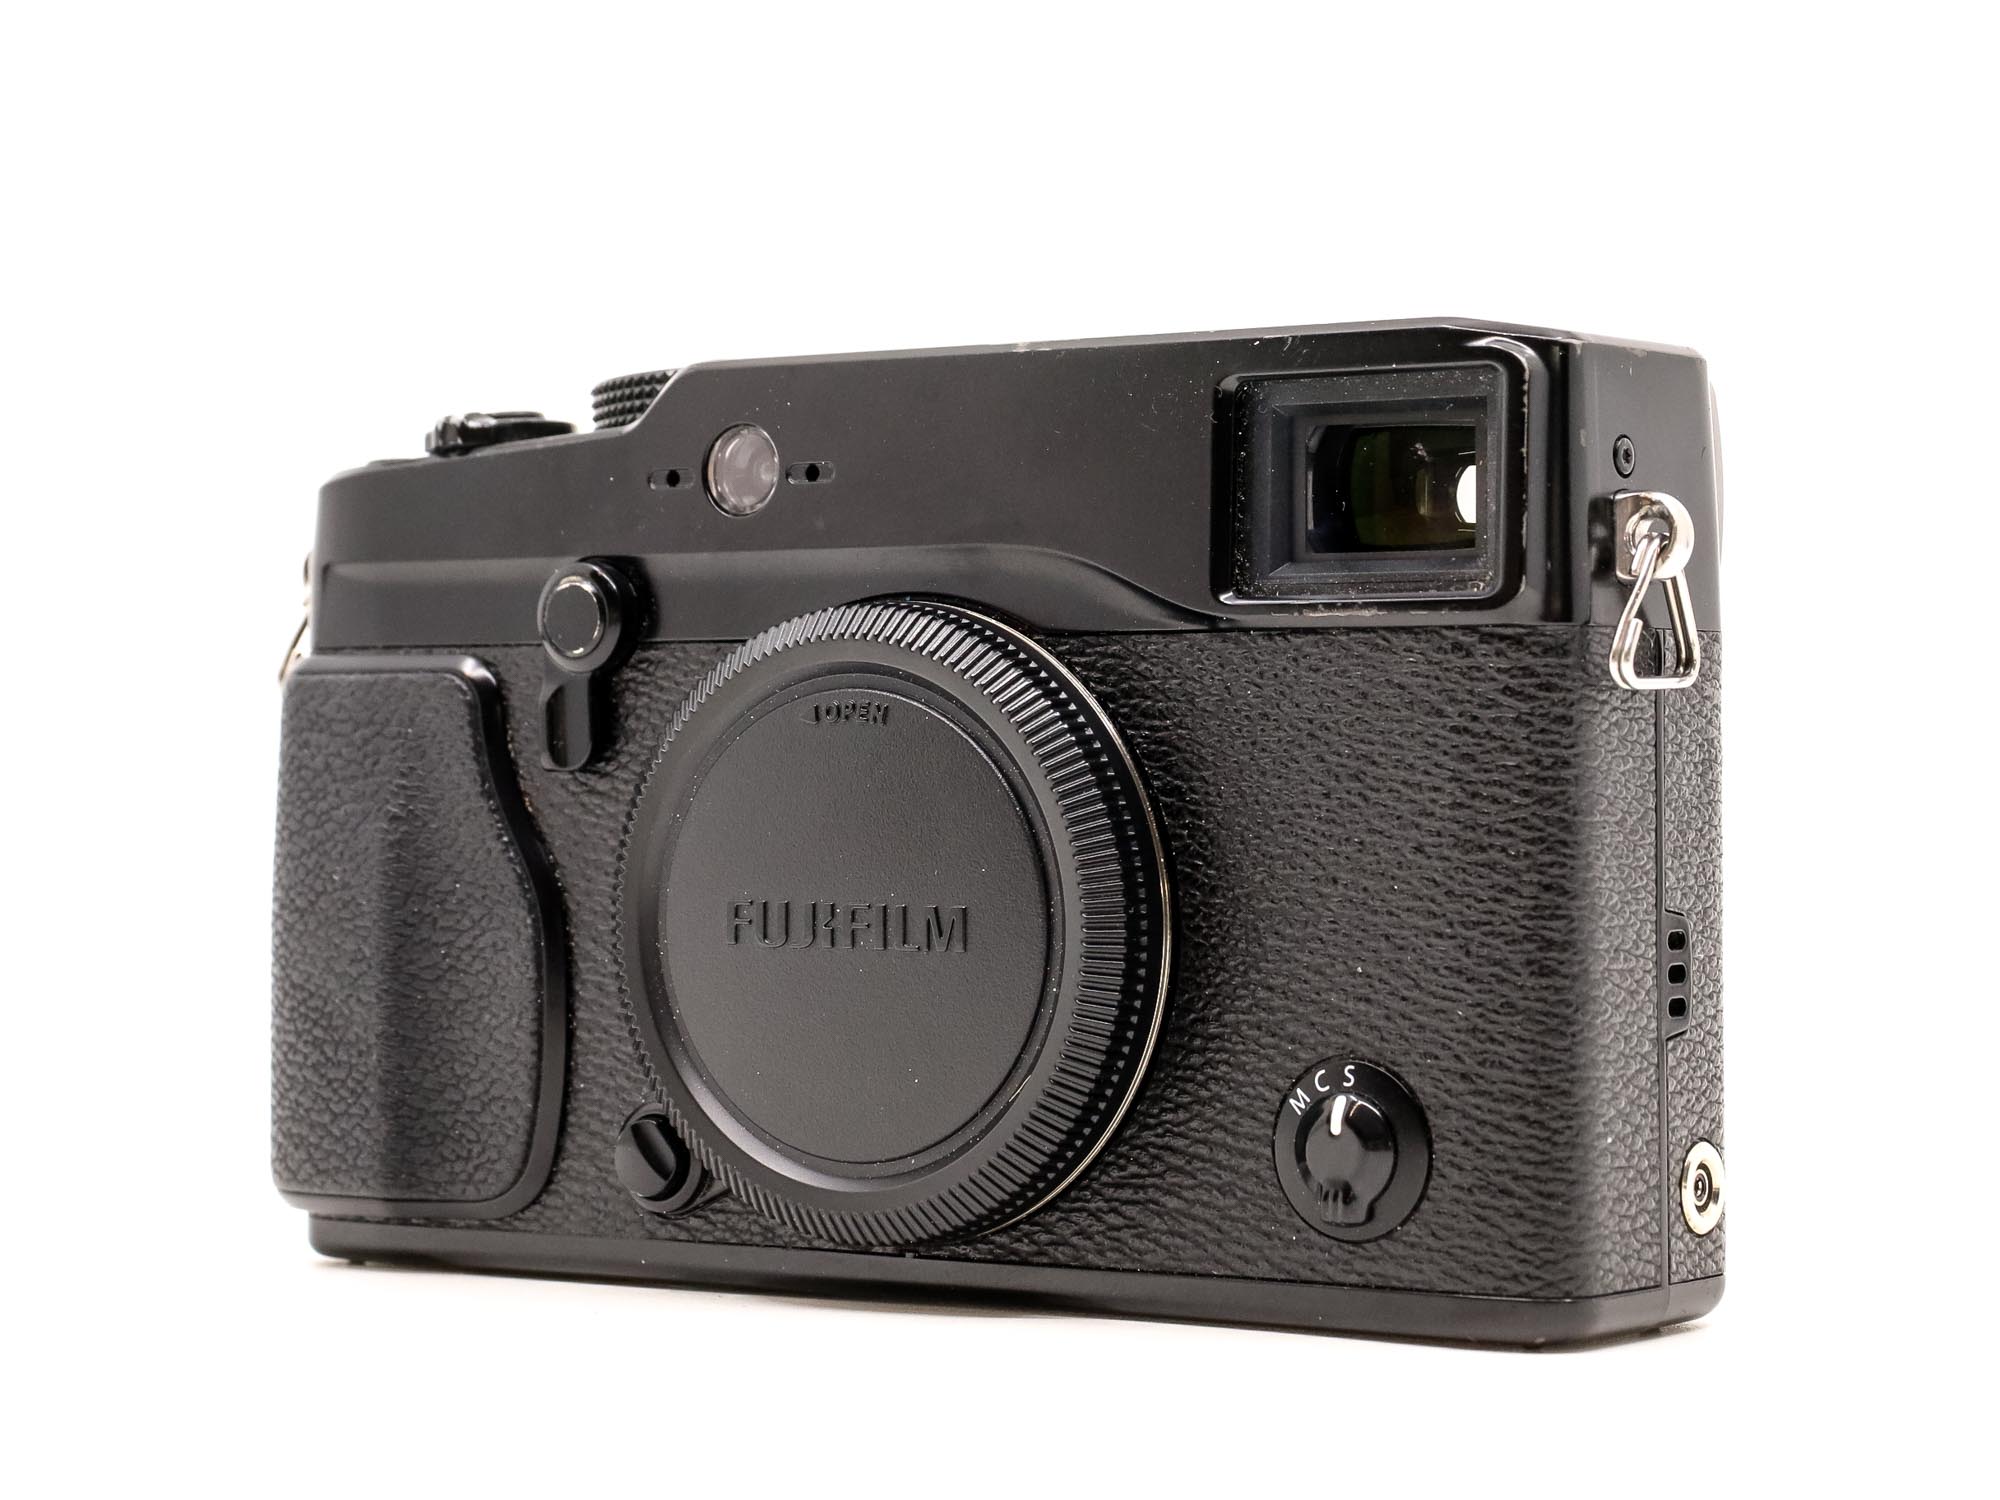 Fujifilm X-Pro 1 (Condition: Good)